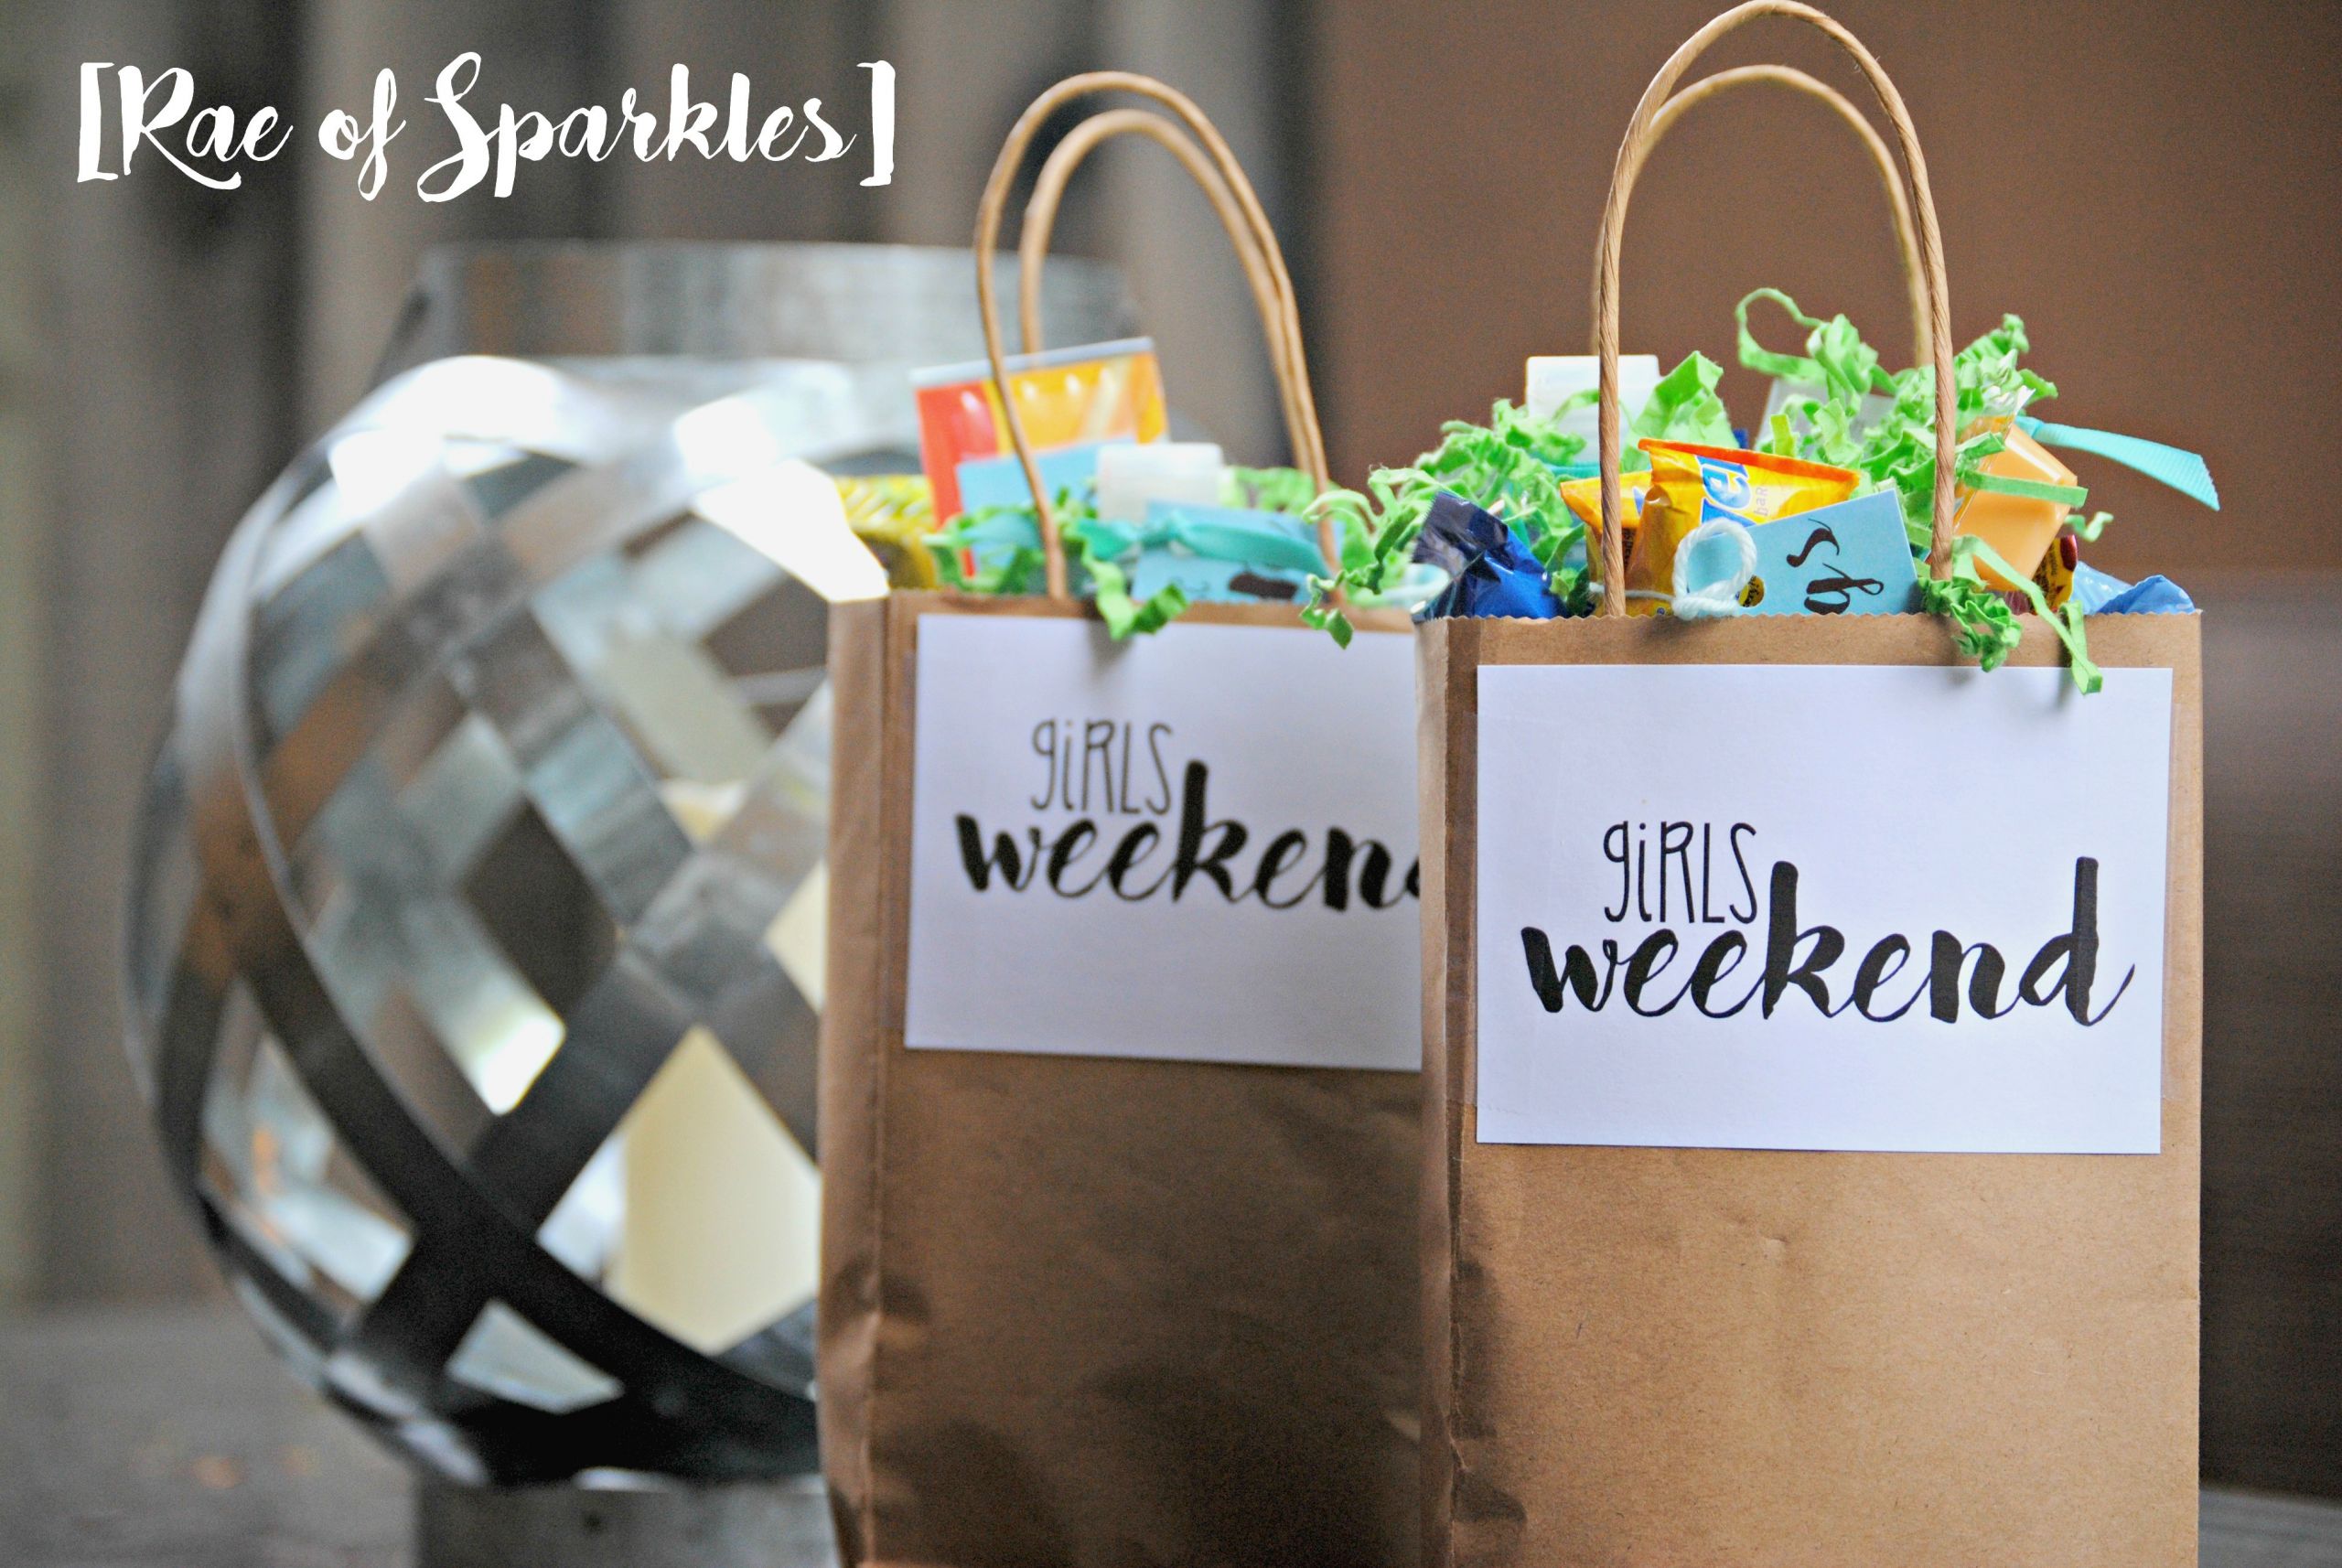 Girls Weekend Gift Bag Ideas
 Girls Weekend Gift Bags